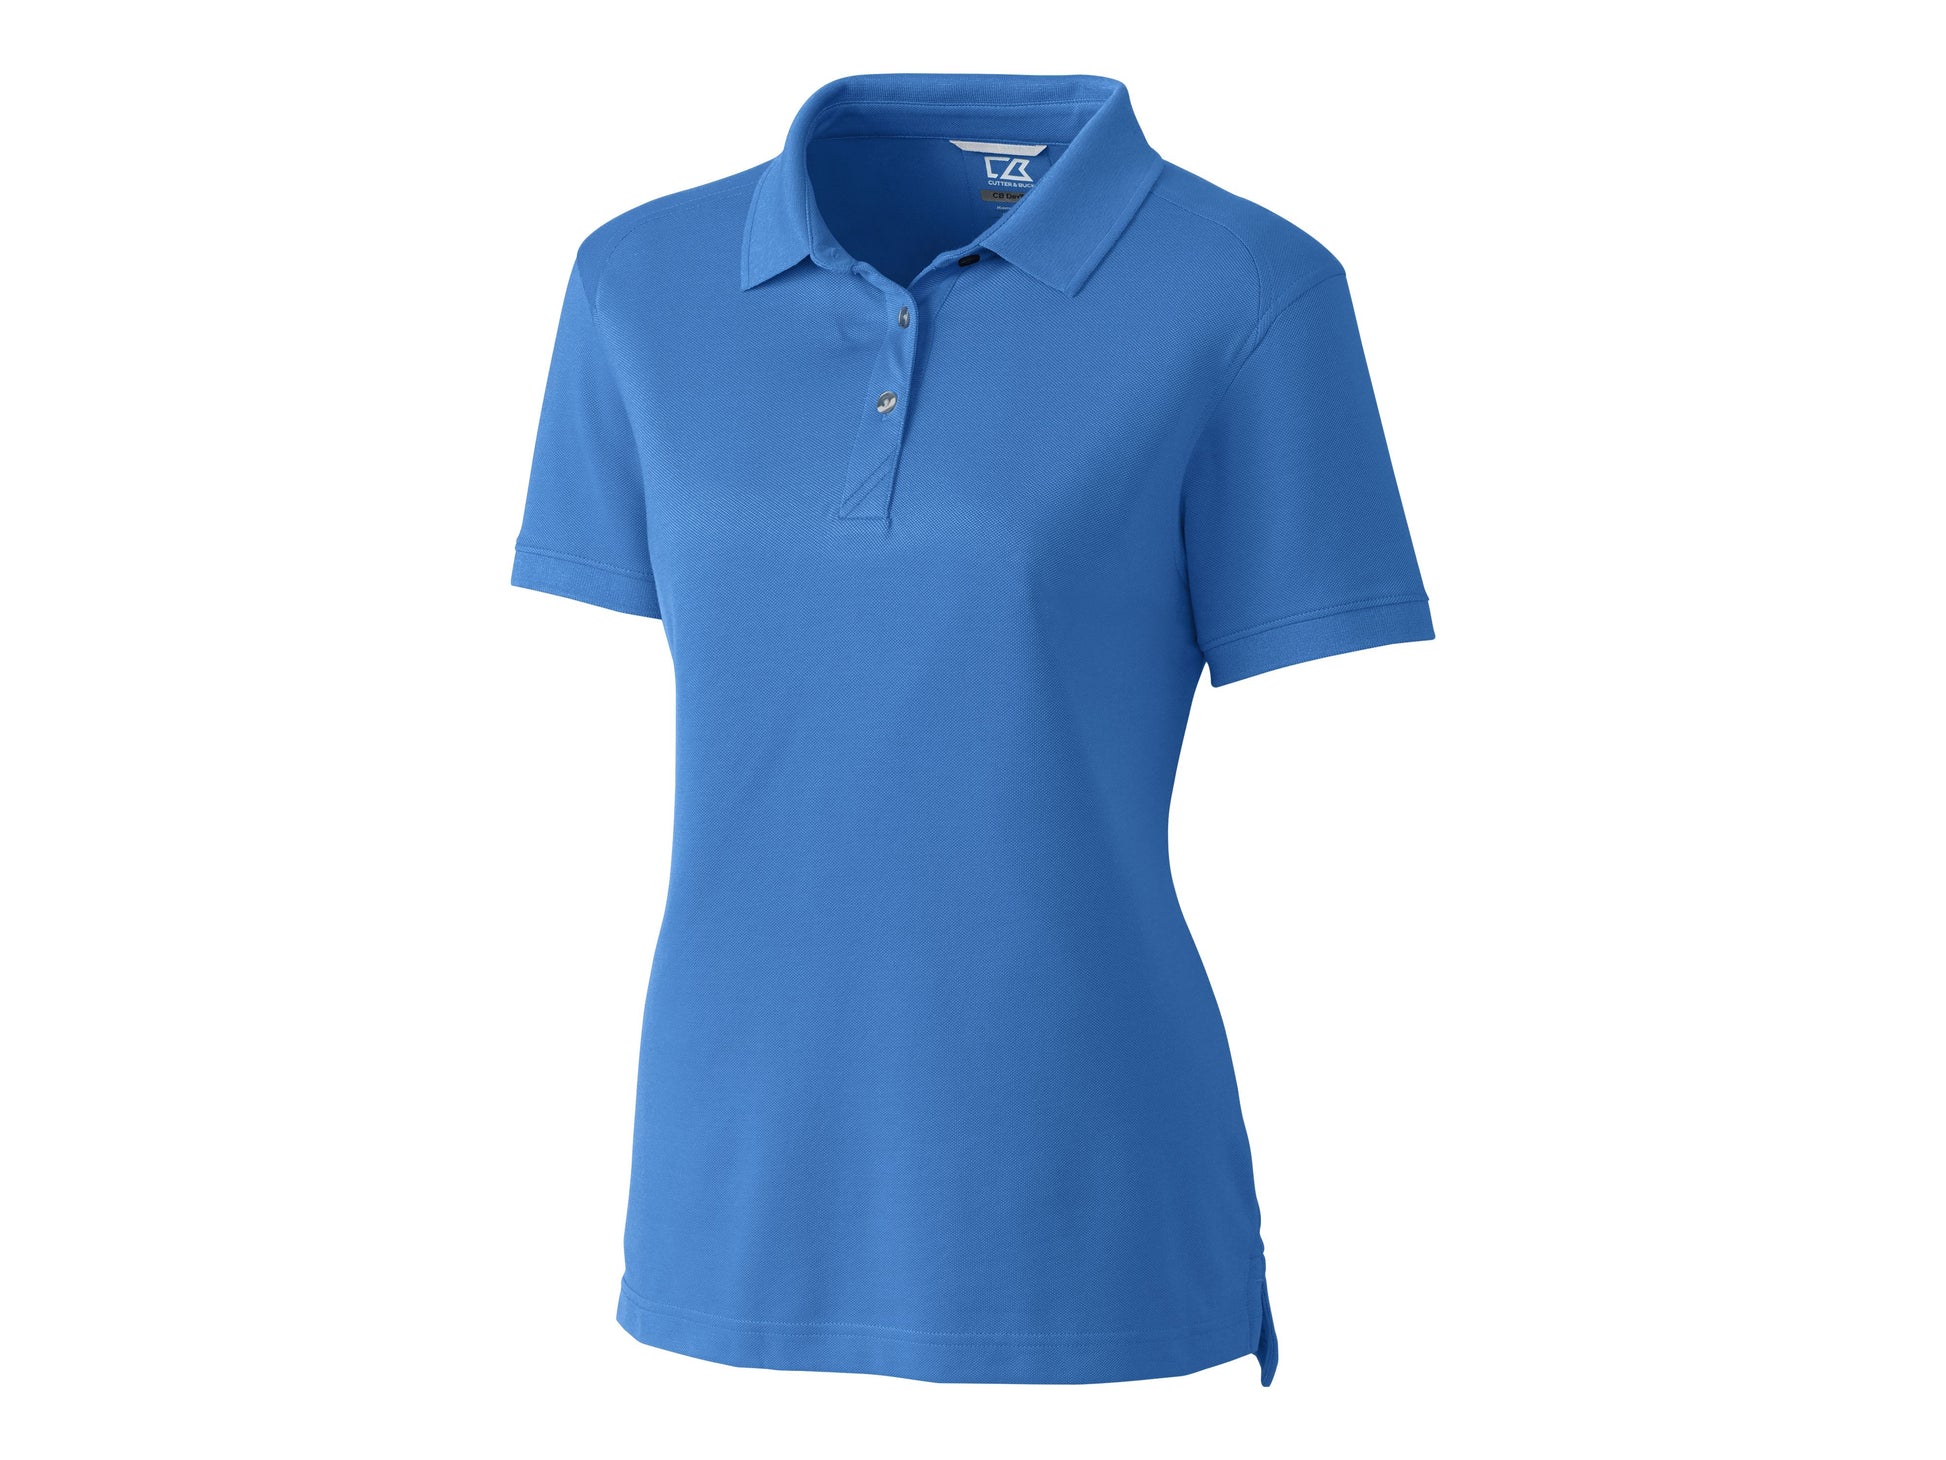 Cutter and Buck Shirts Advantage Polo (Women's Cut) - LCK08685 - Sea Blue